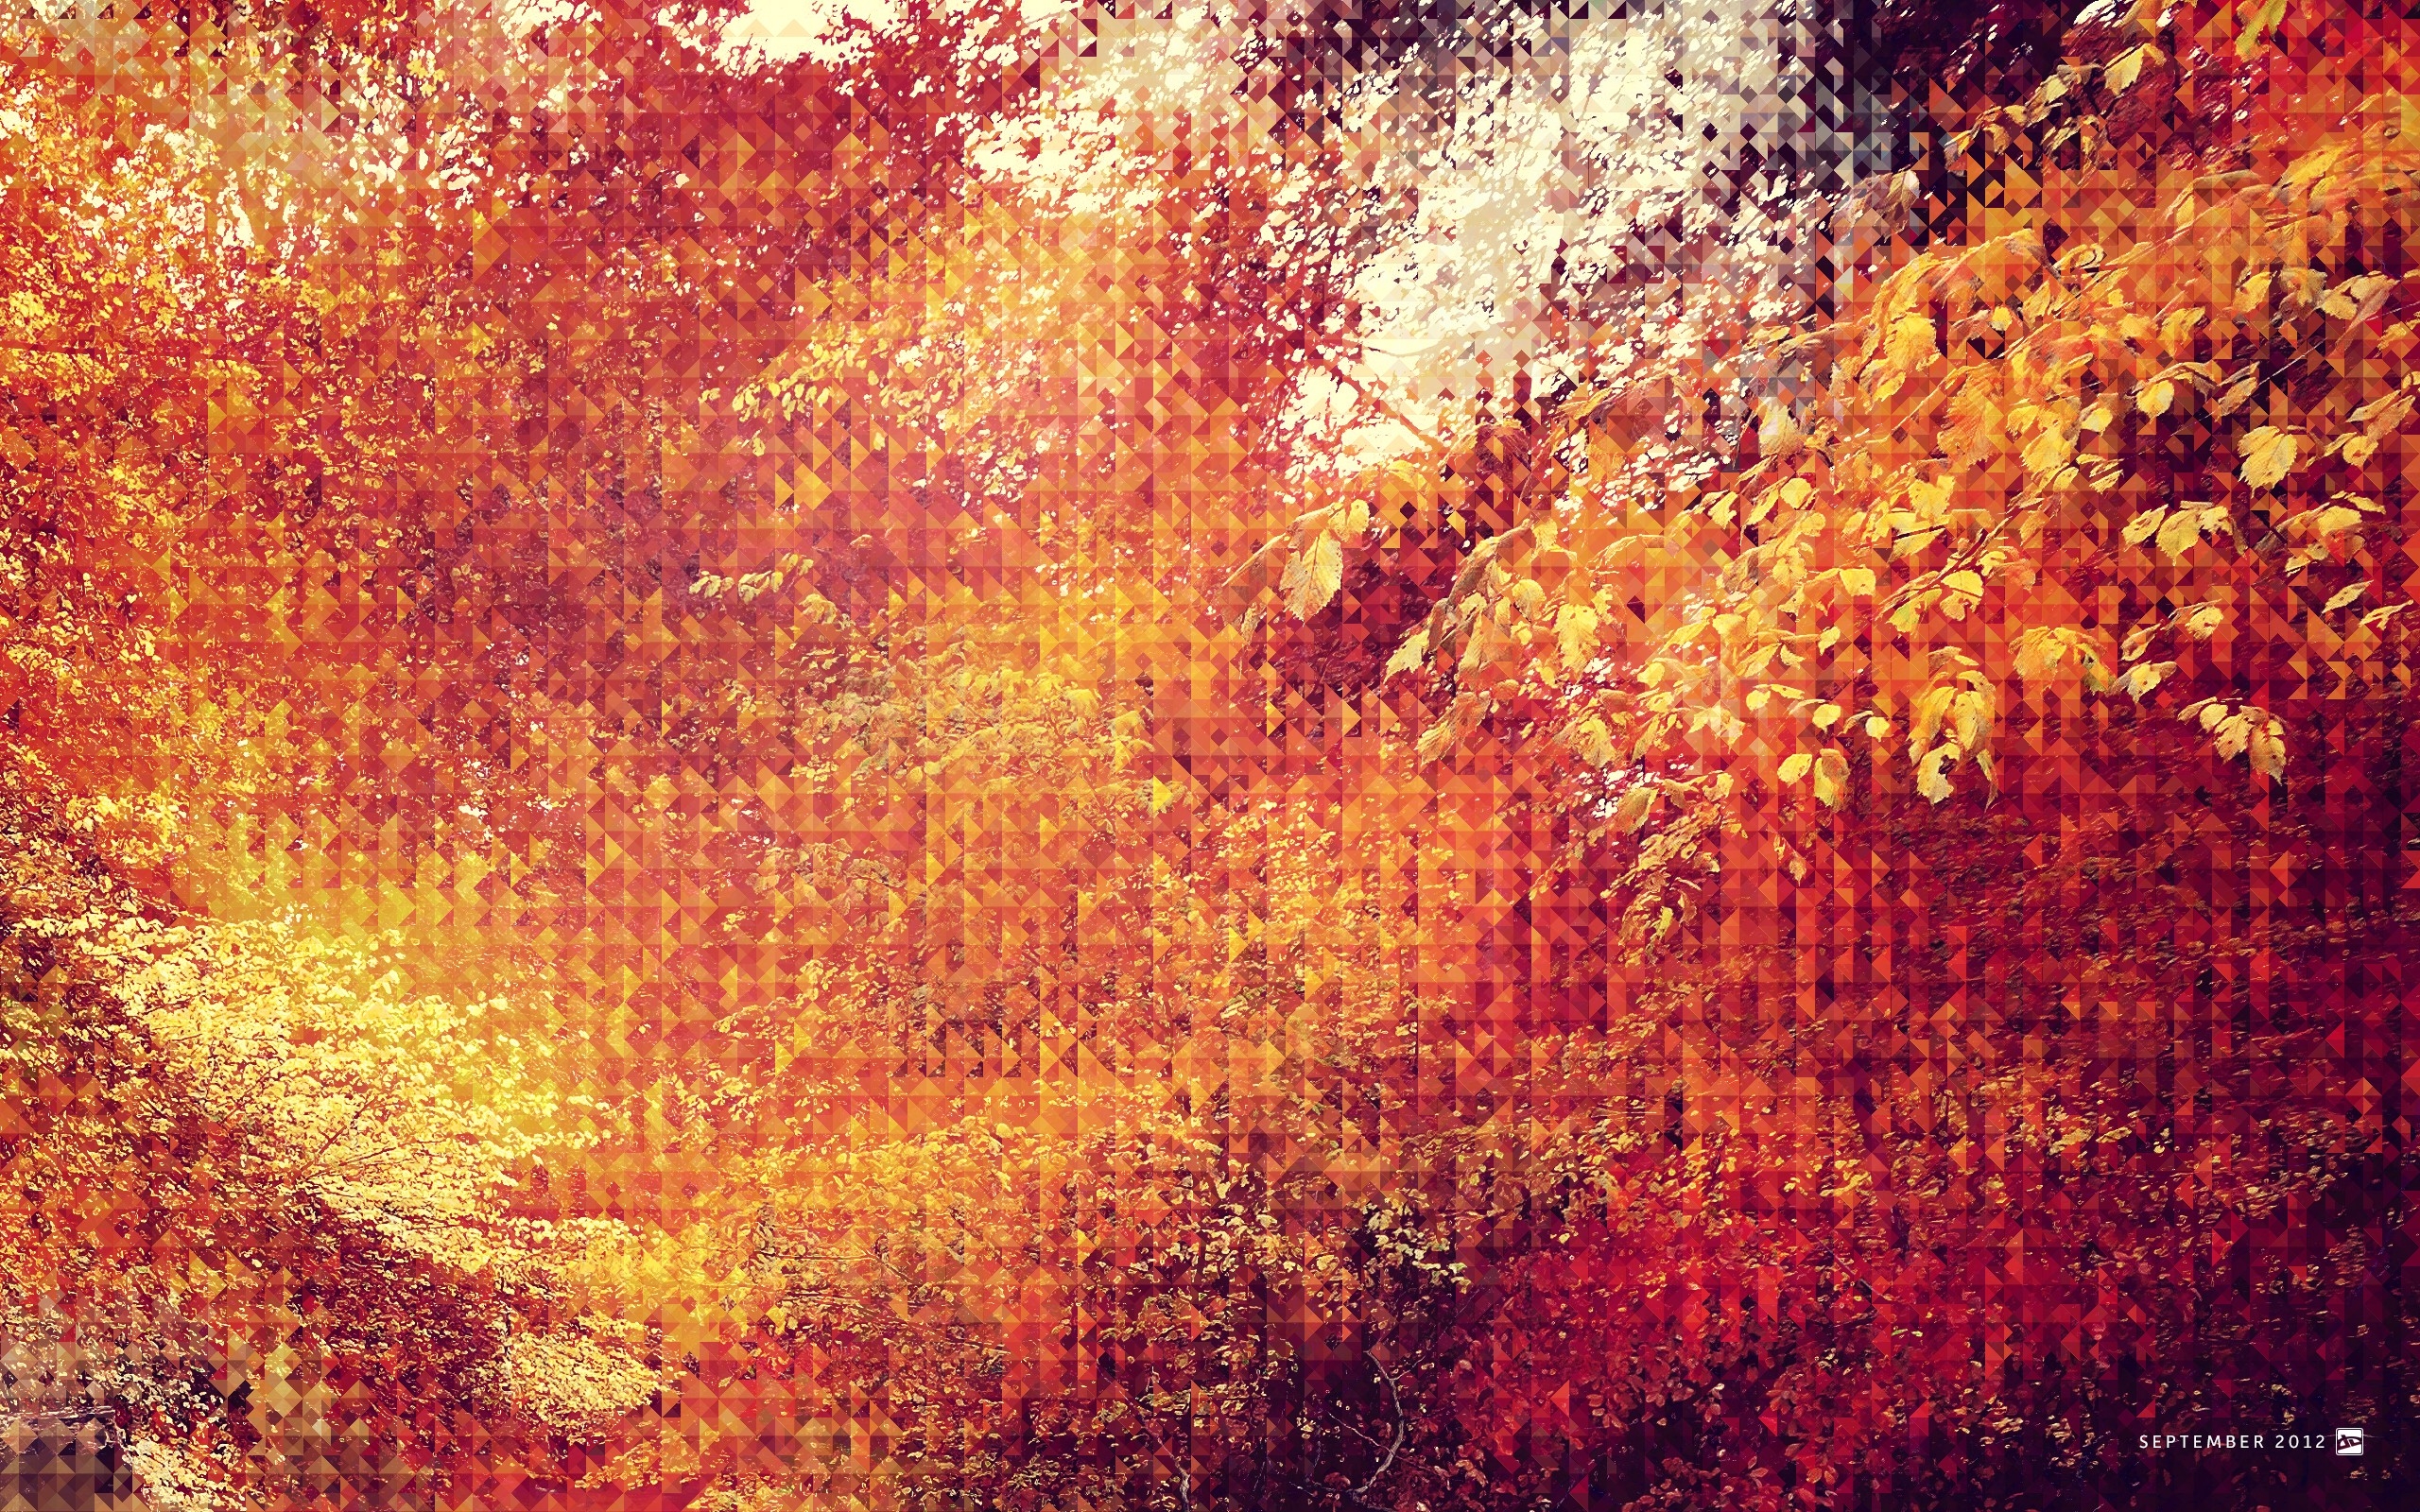 abstract autumn season 2560x1600 wallpaper High Quality Wallpaper, High Definition Wallpaper